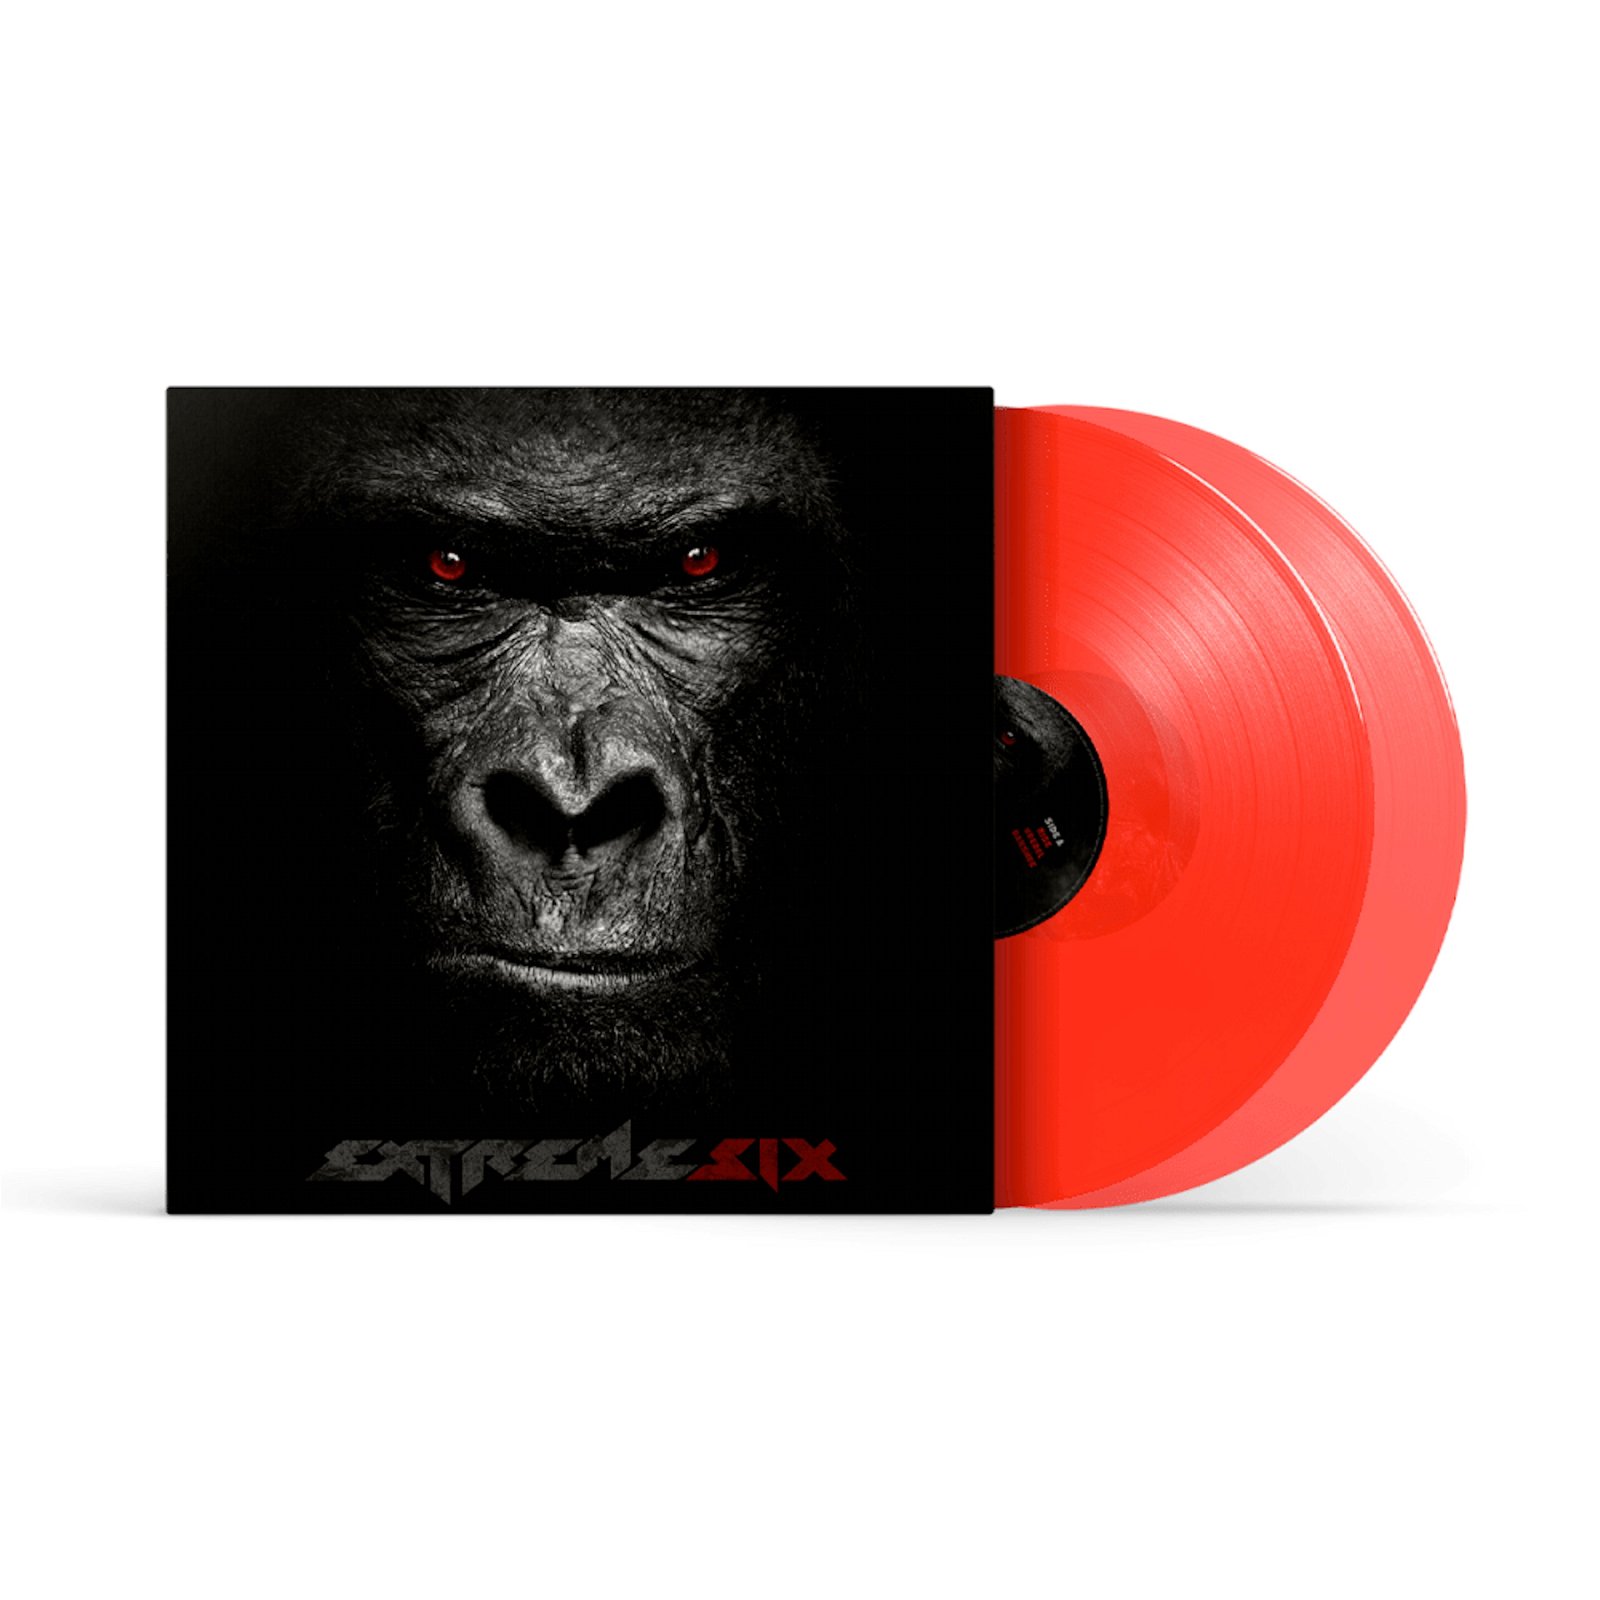 CD Shop - EXTREME SIX RED LTD.